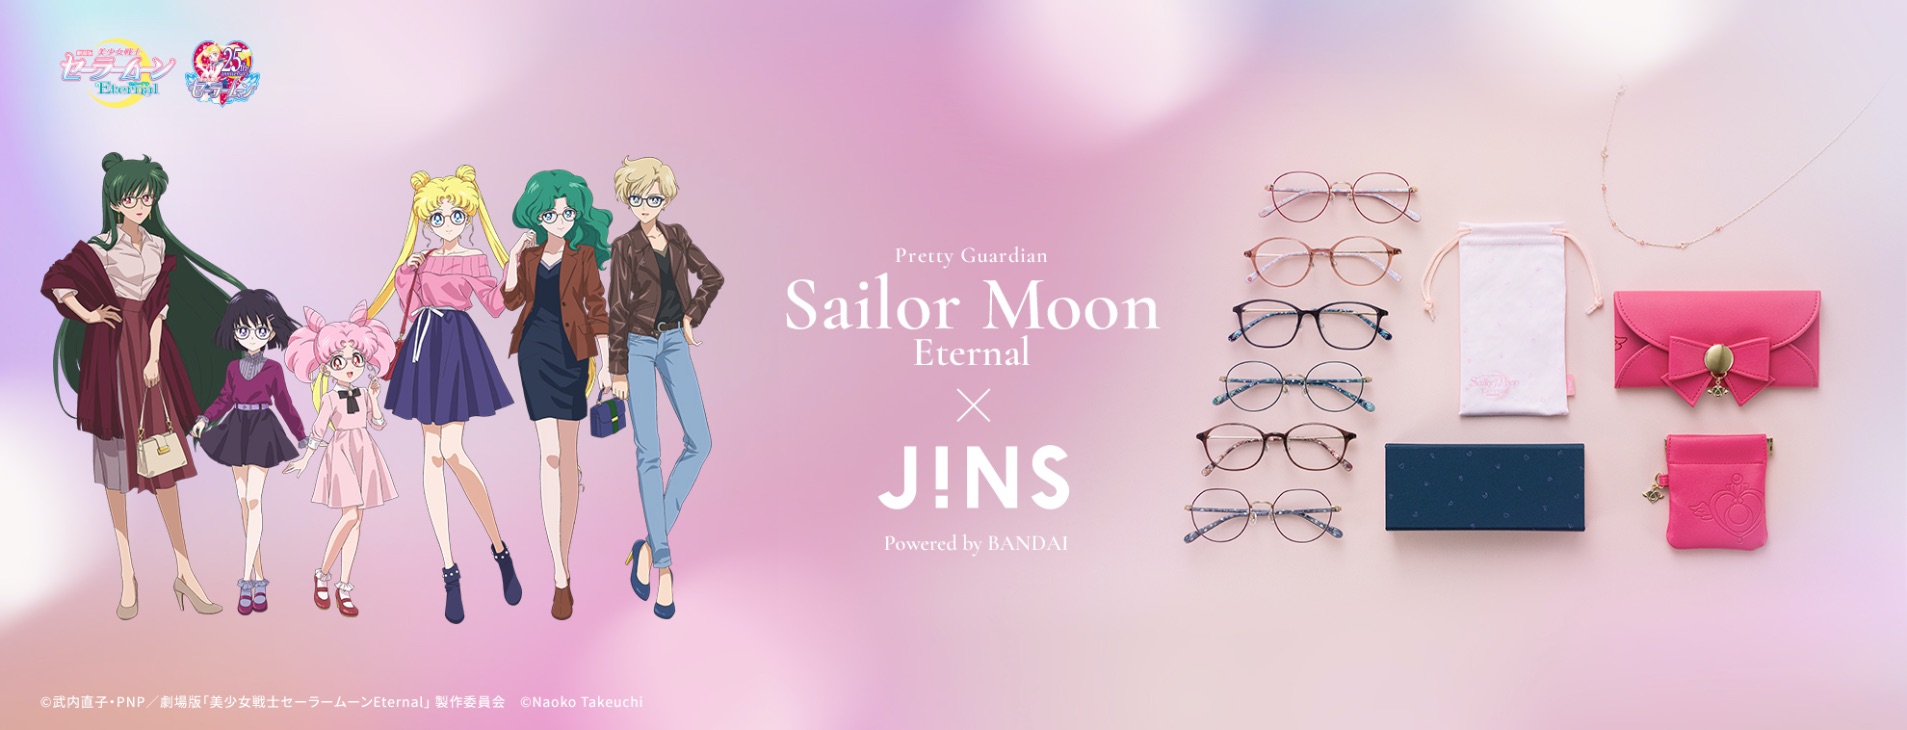 J!NS Rilakkuma PC glasses for seriously kawaii eyewear | Japan Trends